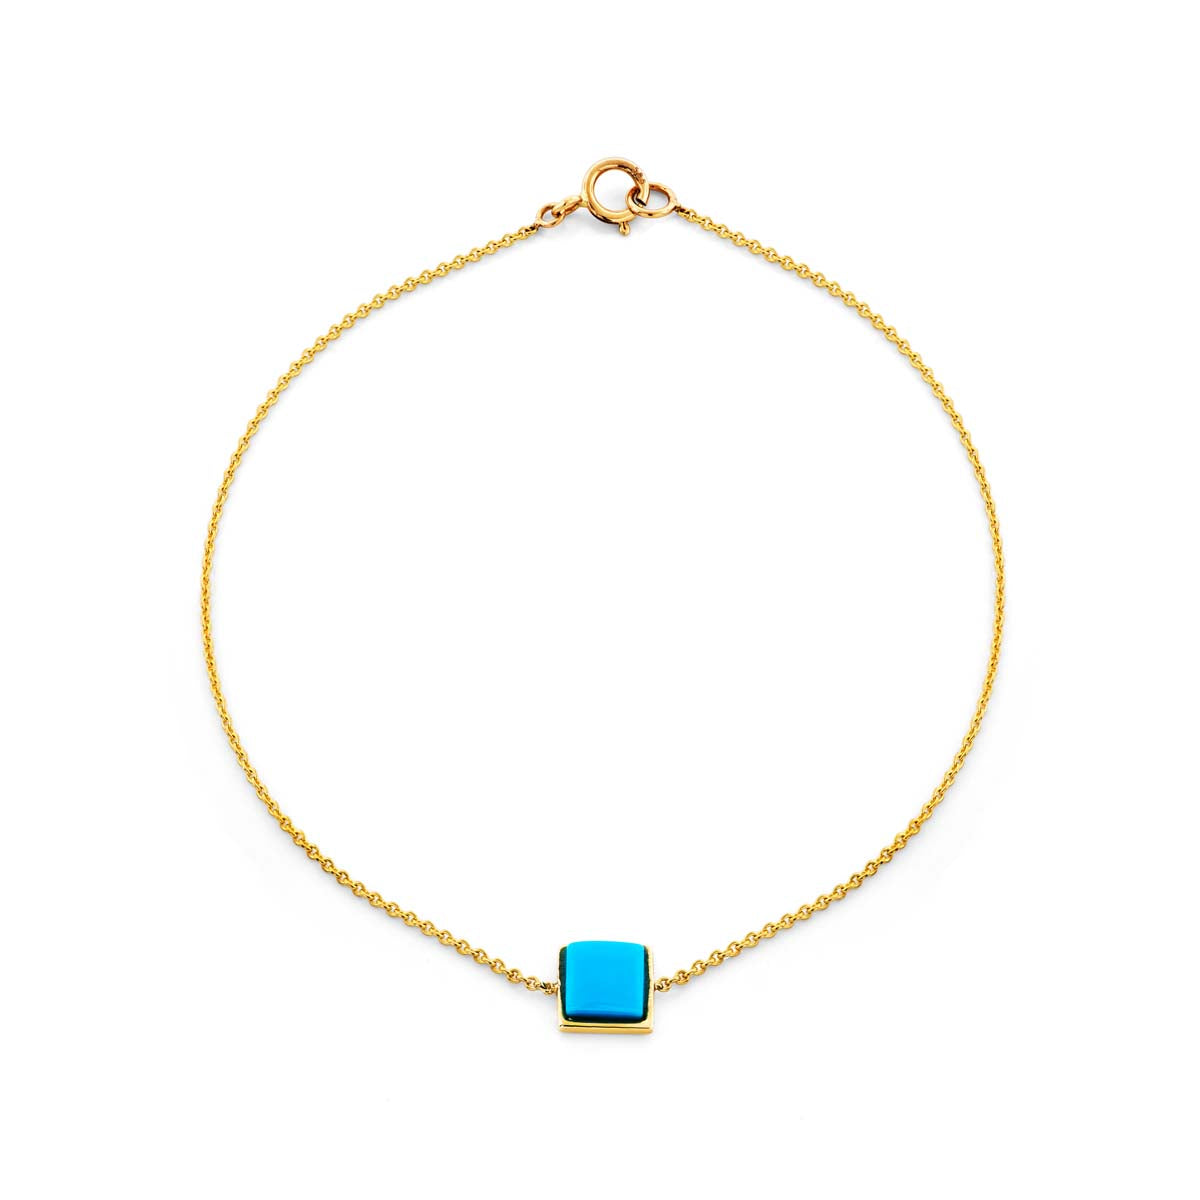 square cabochon turquoise gold bracelet prb 058 14ky